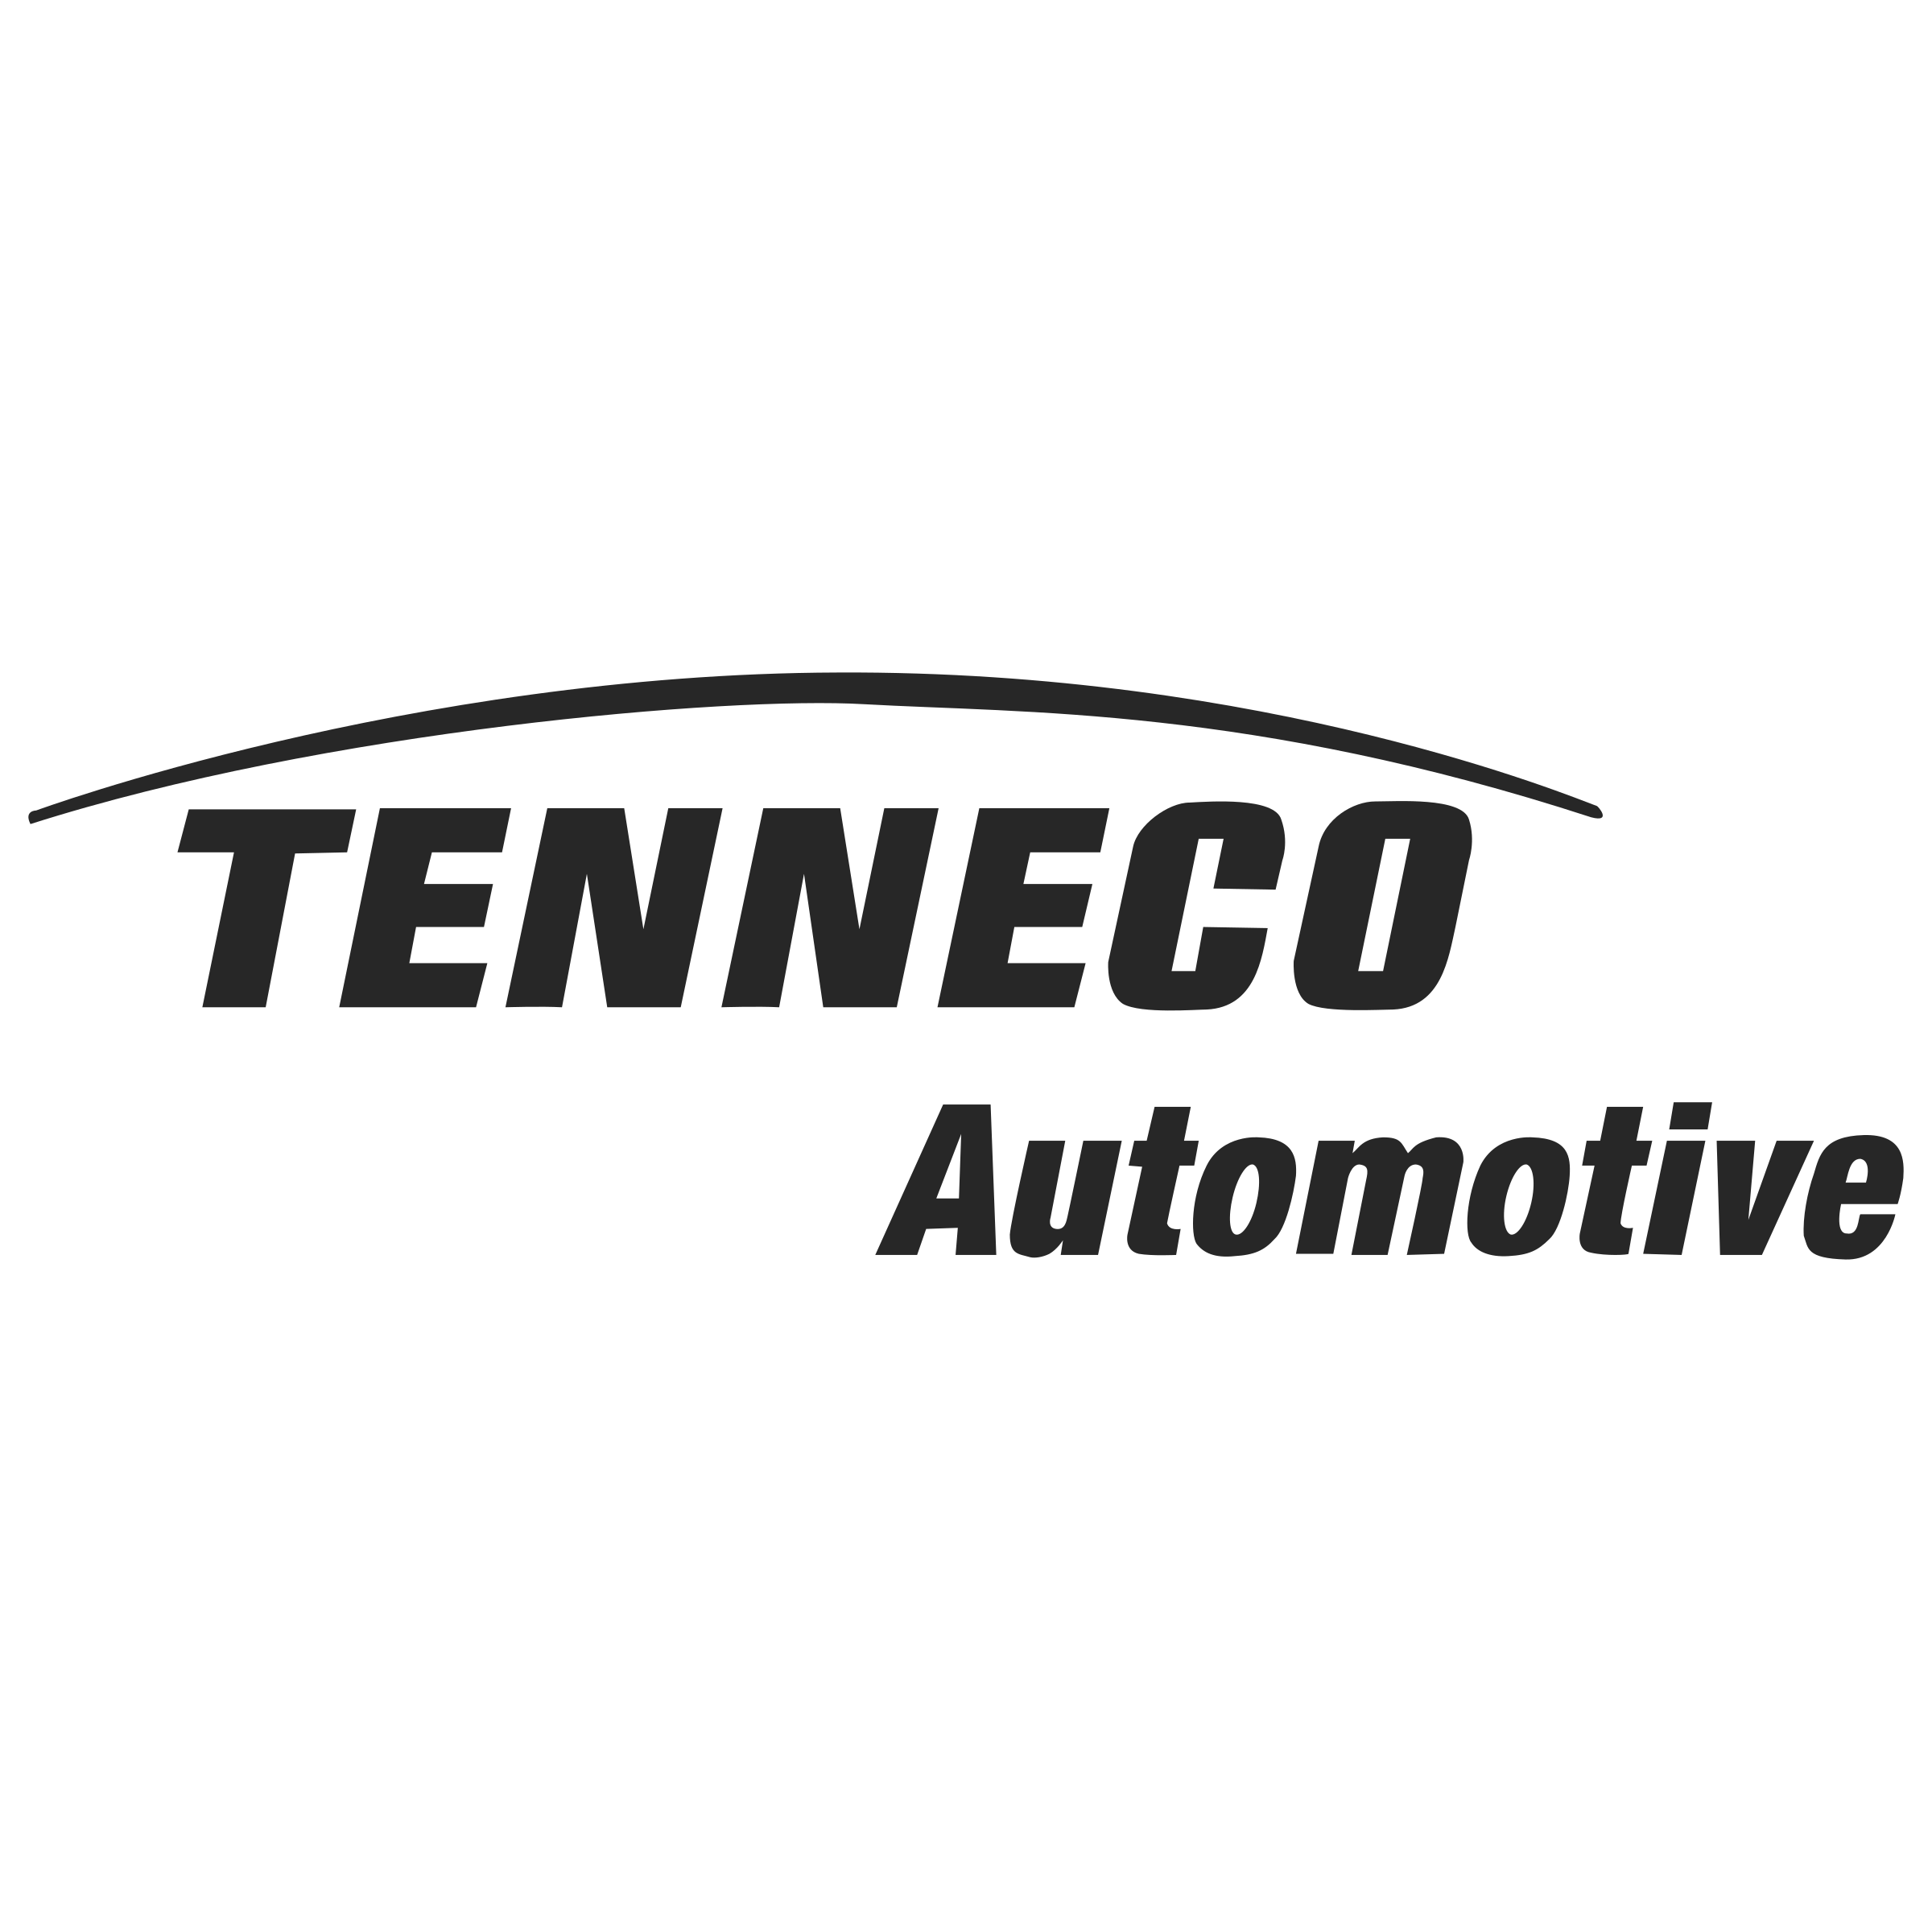 Tenneco Logo - Tenneco Automotive Logo PNG Transparent & SVG Vector - Freebie Supply